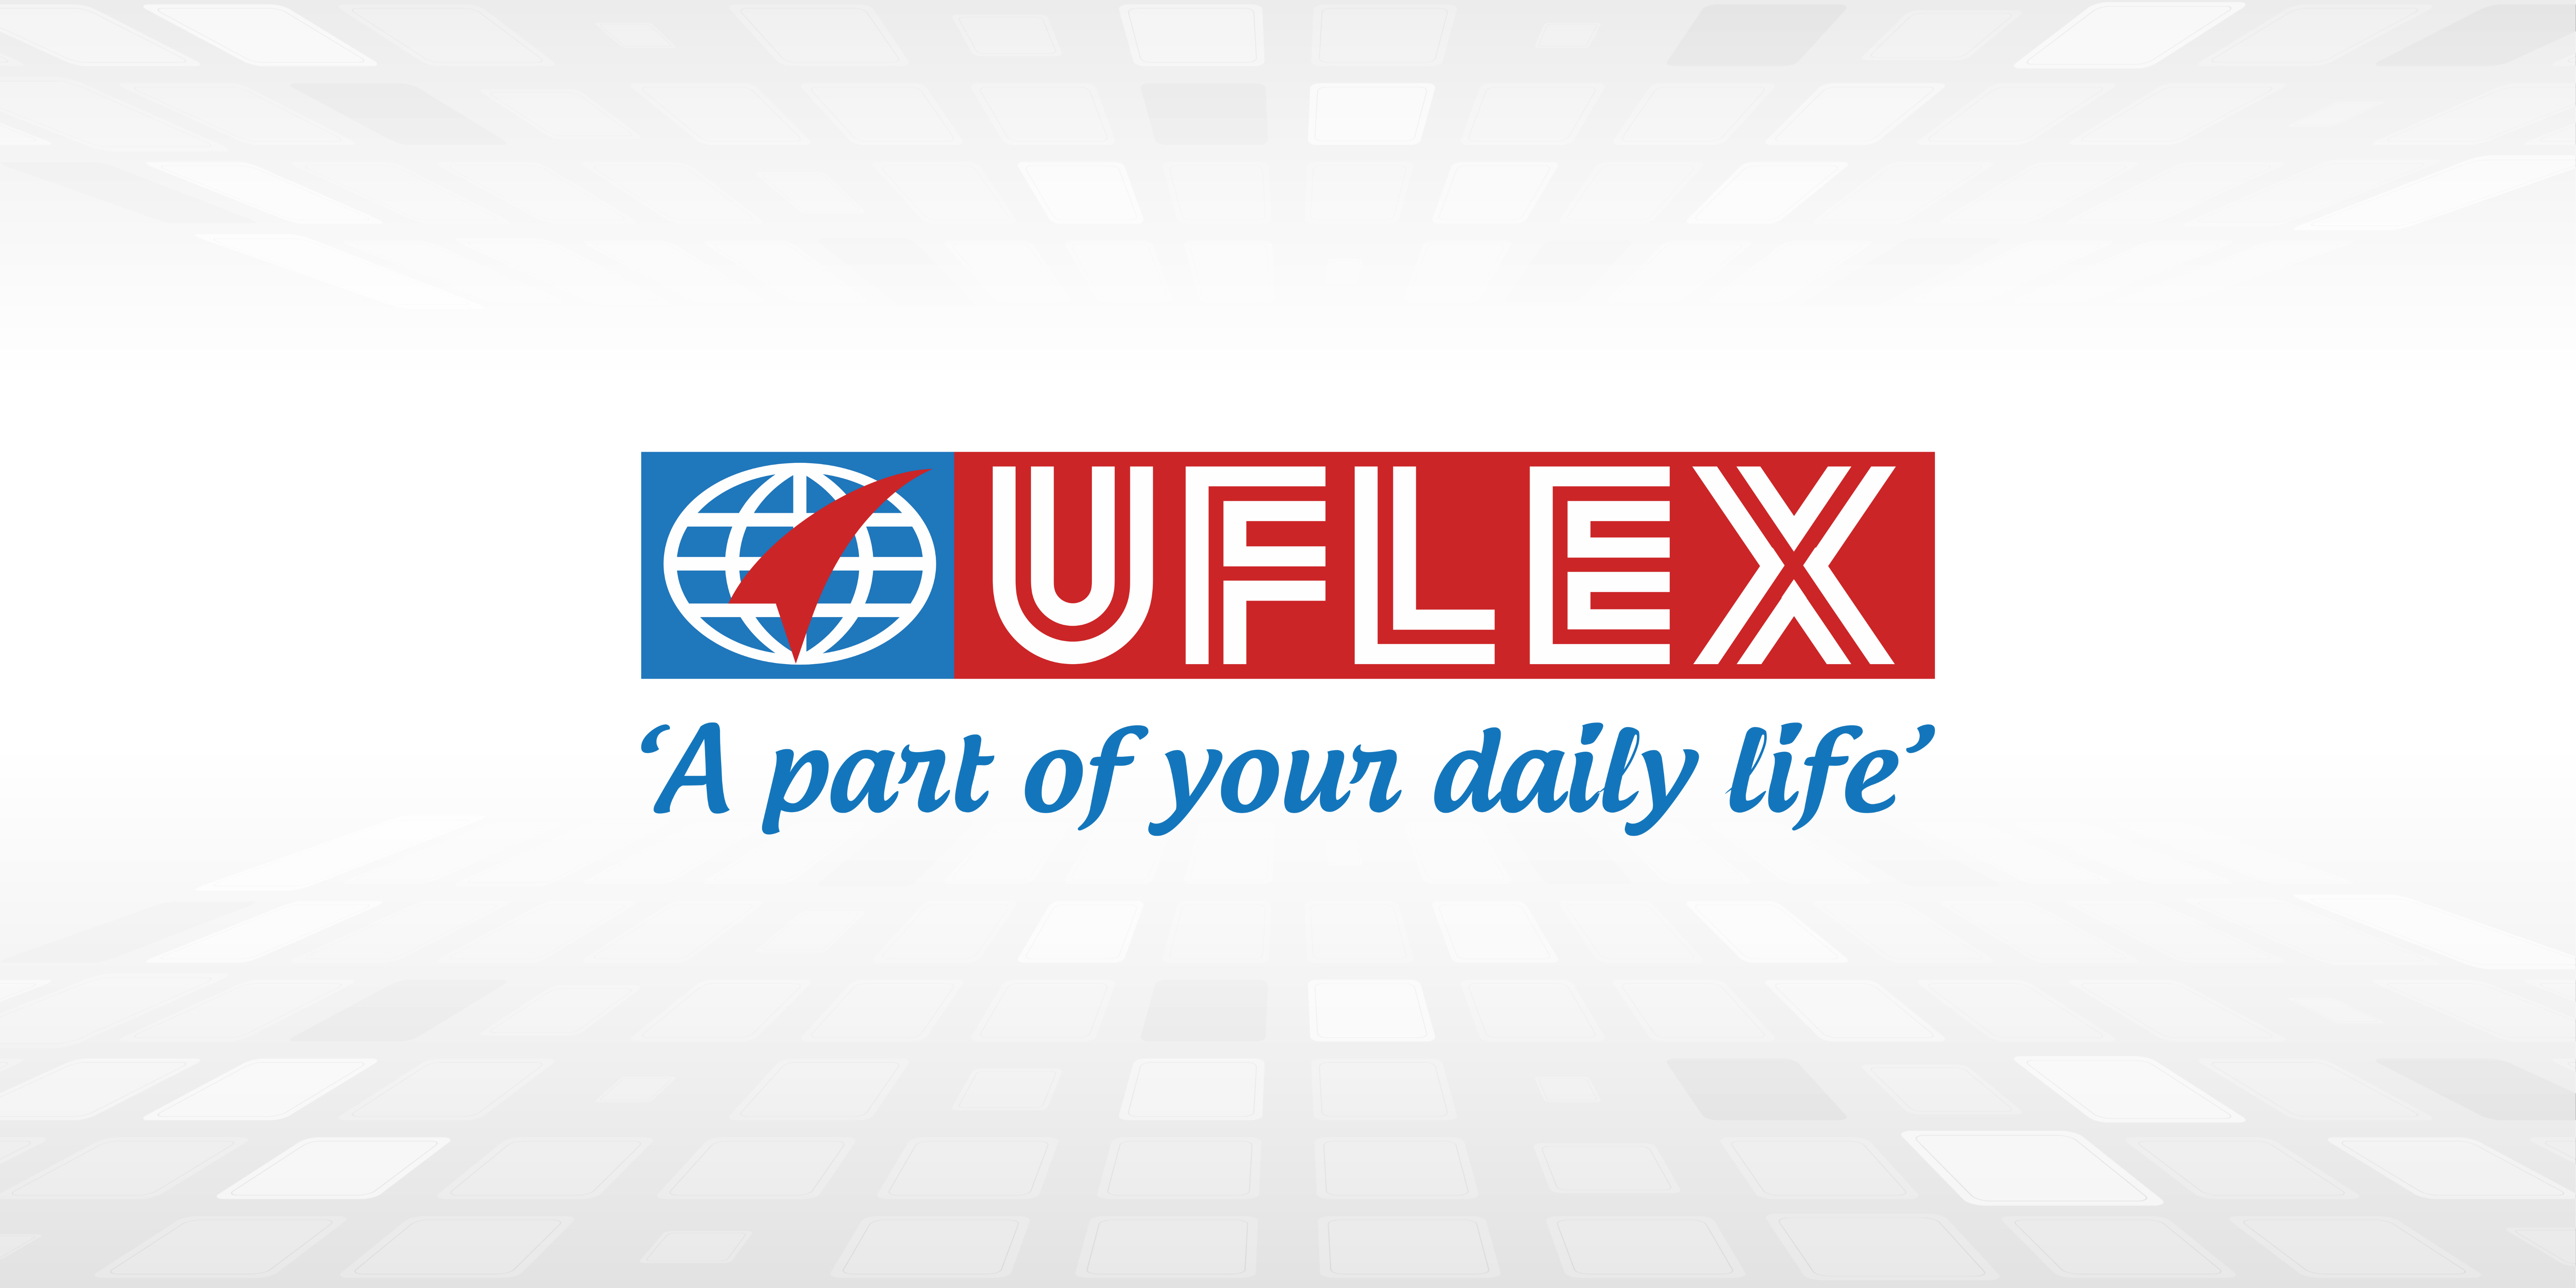 UFlex Revolutionizes Workforce Development with Innovative Learning Academy